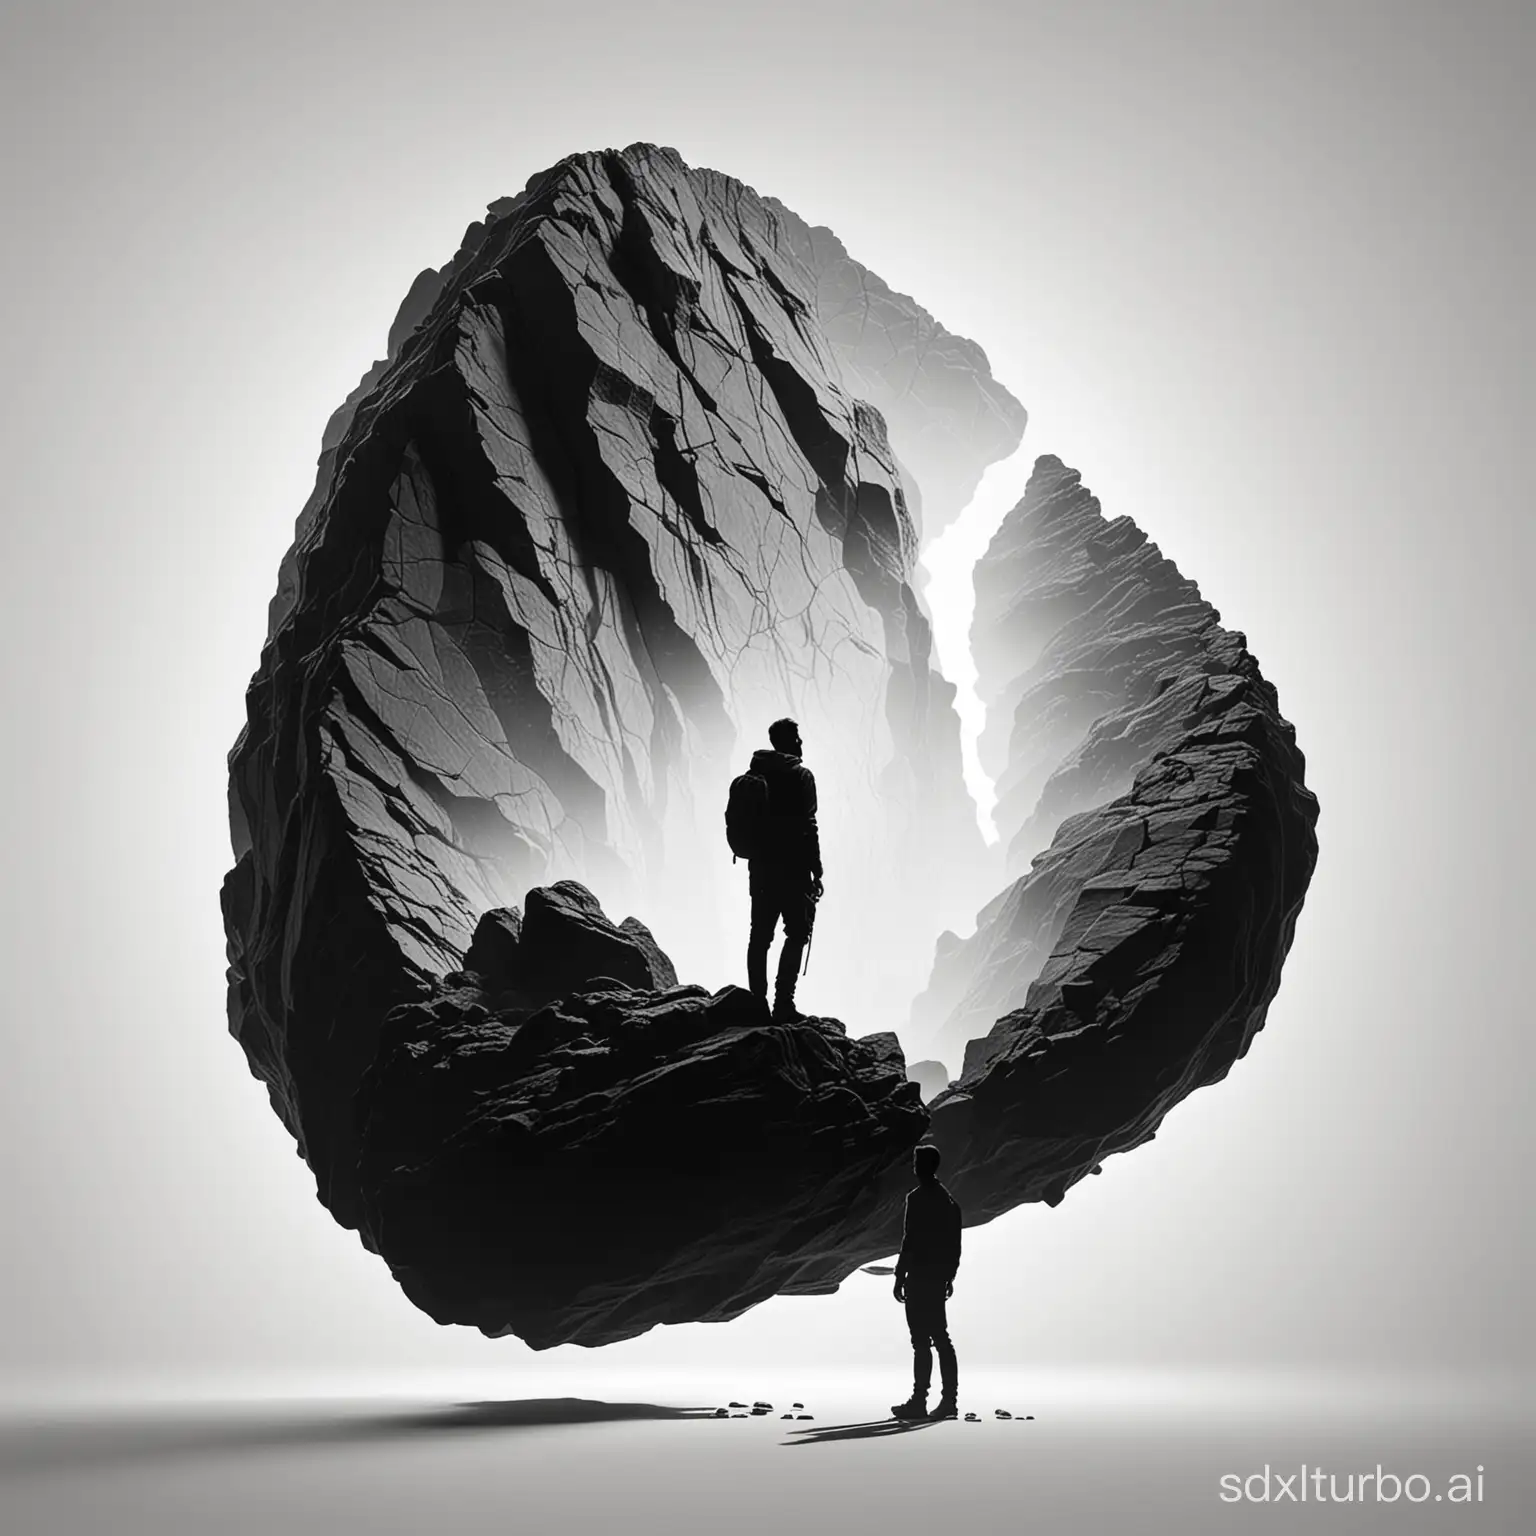 Contemplative-Man-Silhouette-Admiring-Large-Rock-in-Minimalist-Art